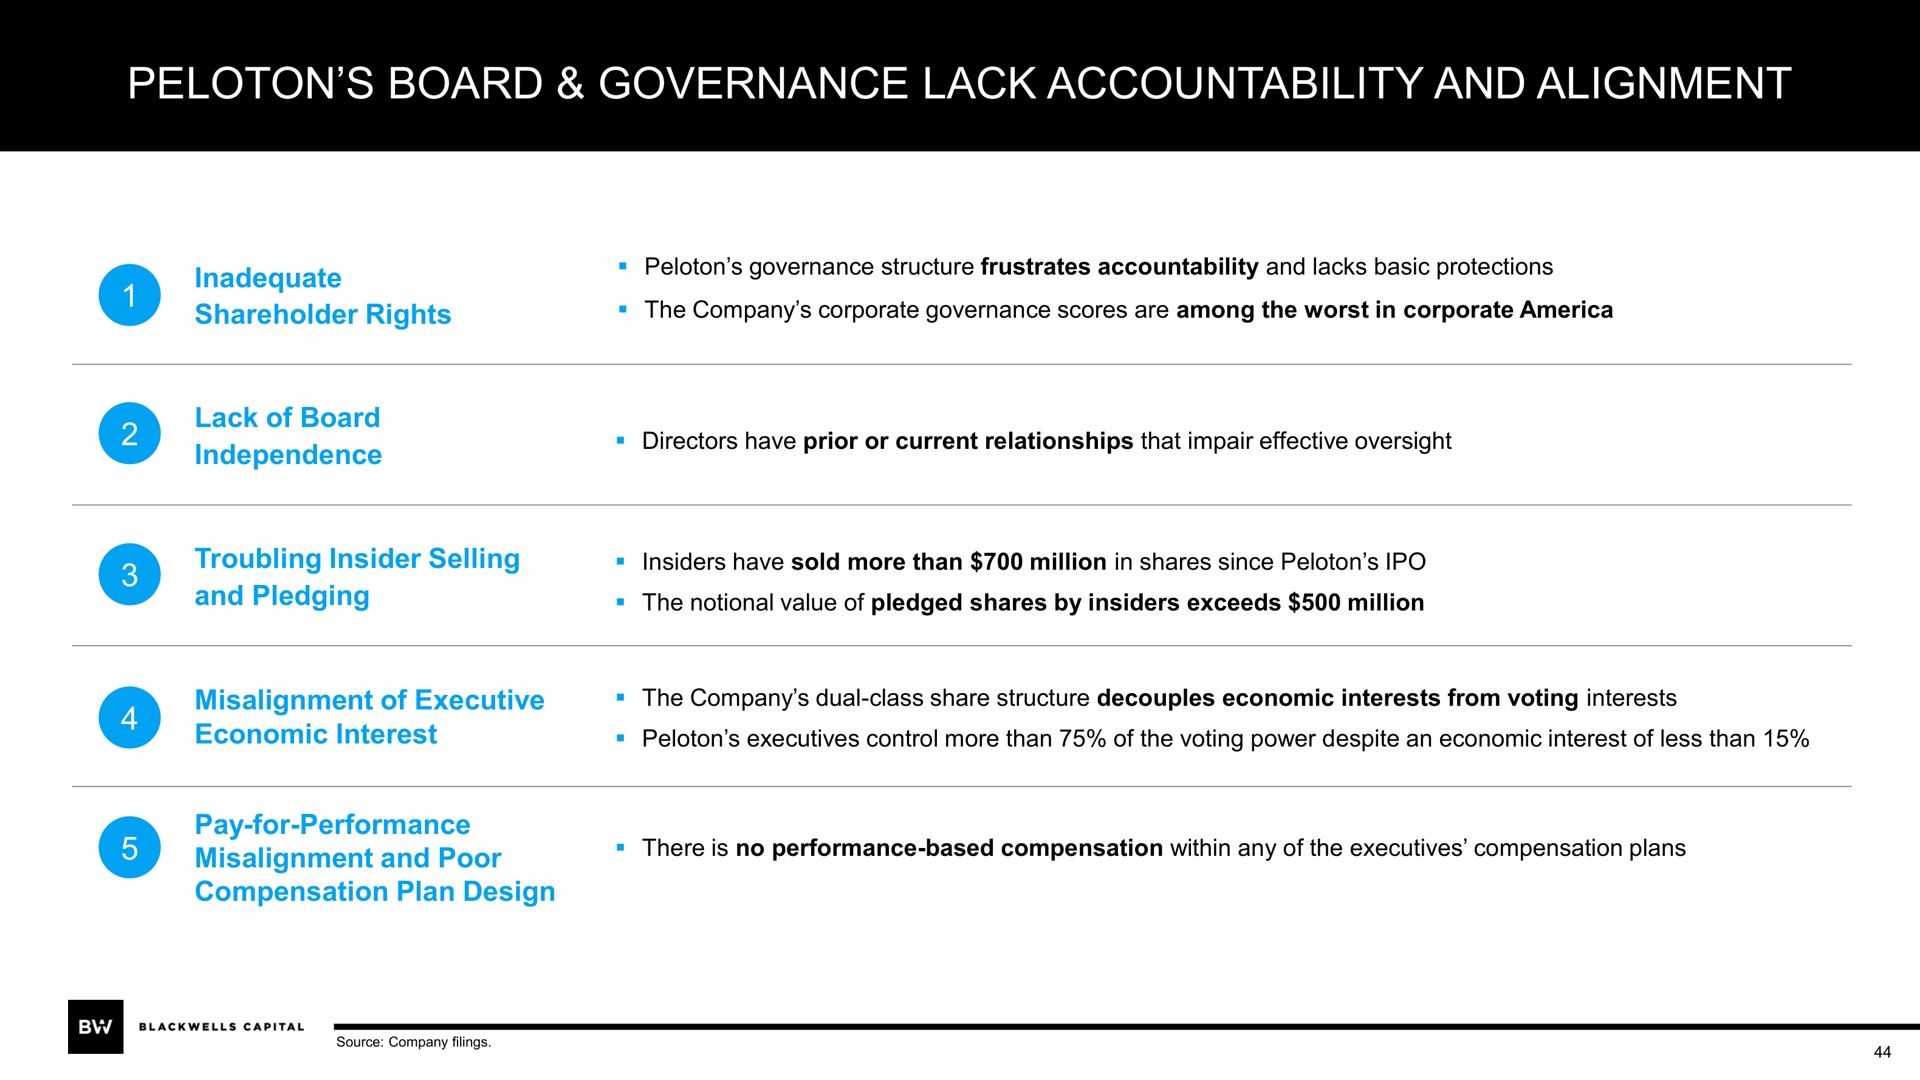 peloton board governance lack accountability and alignment | Blackwells Capital